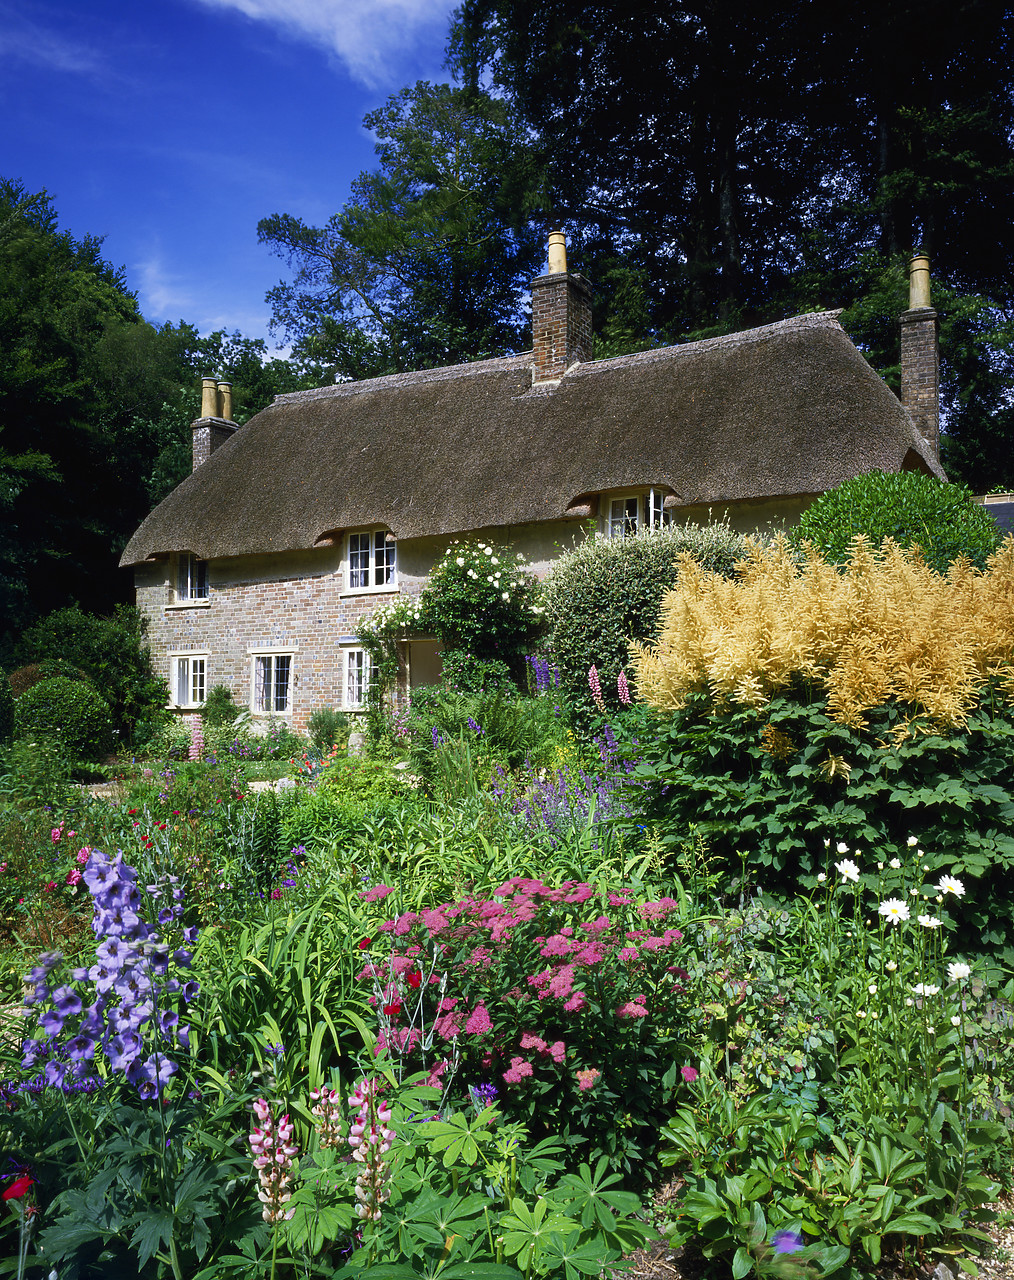 #86745-2 - Thomas Hardy's Cottage & Garden, Higher Bockhampton, Dorset, England